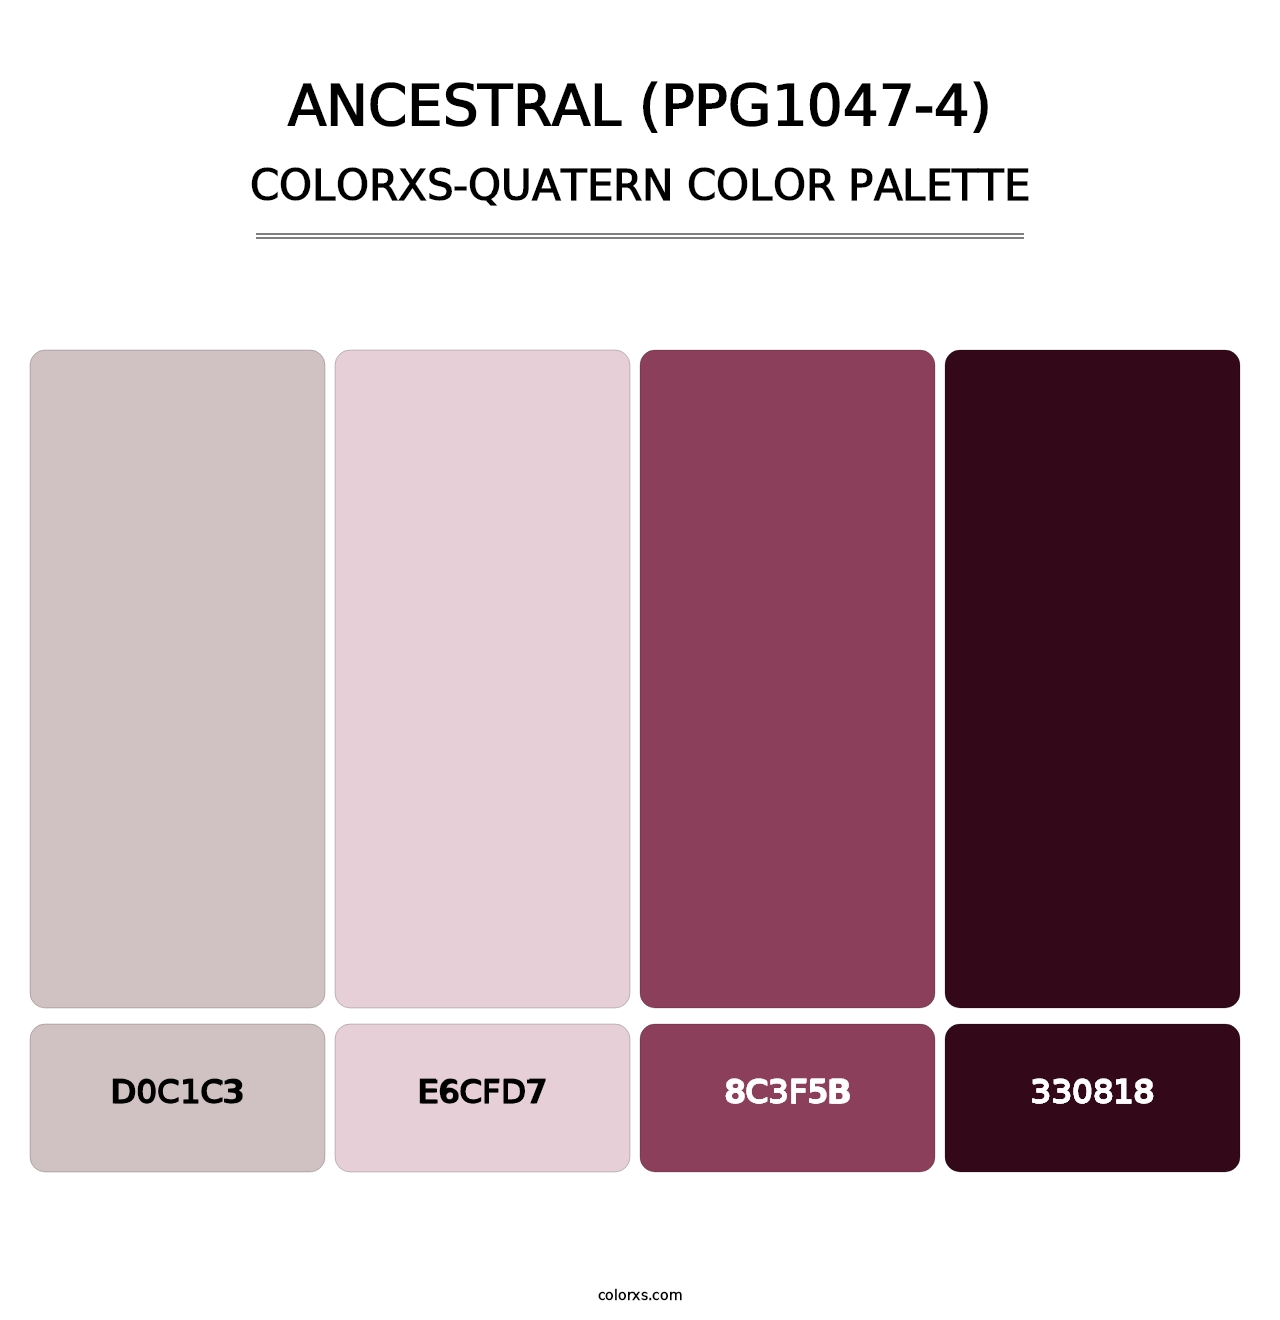 Ancestral (PPG1047-4) - Colorxs Quatern Palette